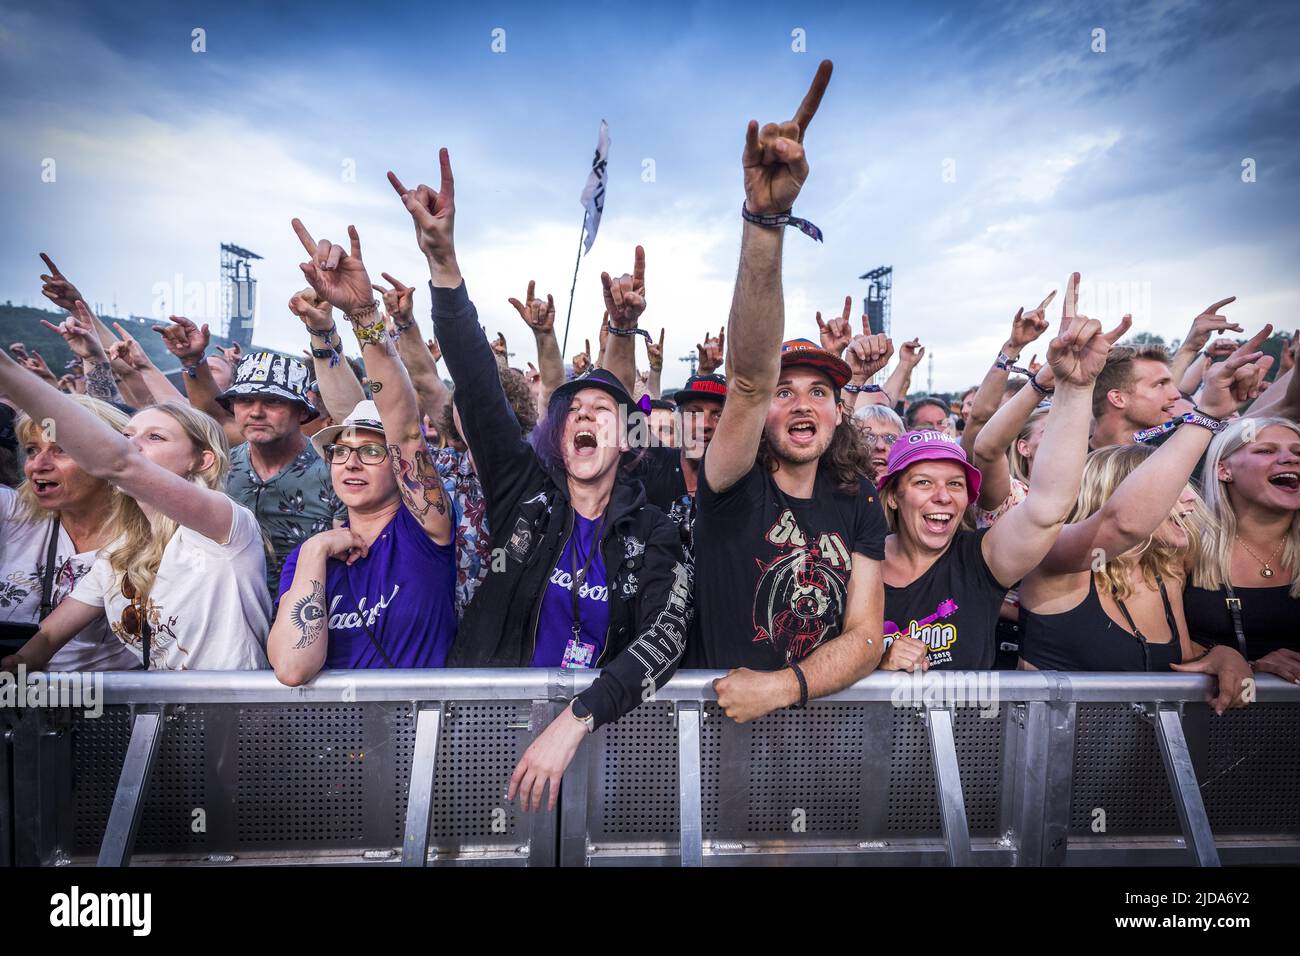 2022-06-19 20:36:42 LANDGRAAF - Fans von Volbeat während des dritten Tages des Pinkpop Musikfestivals. ANP MARCEL VAN HOORN niederlande Out - belgien Out Stockfoto